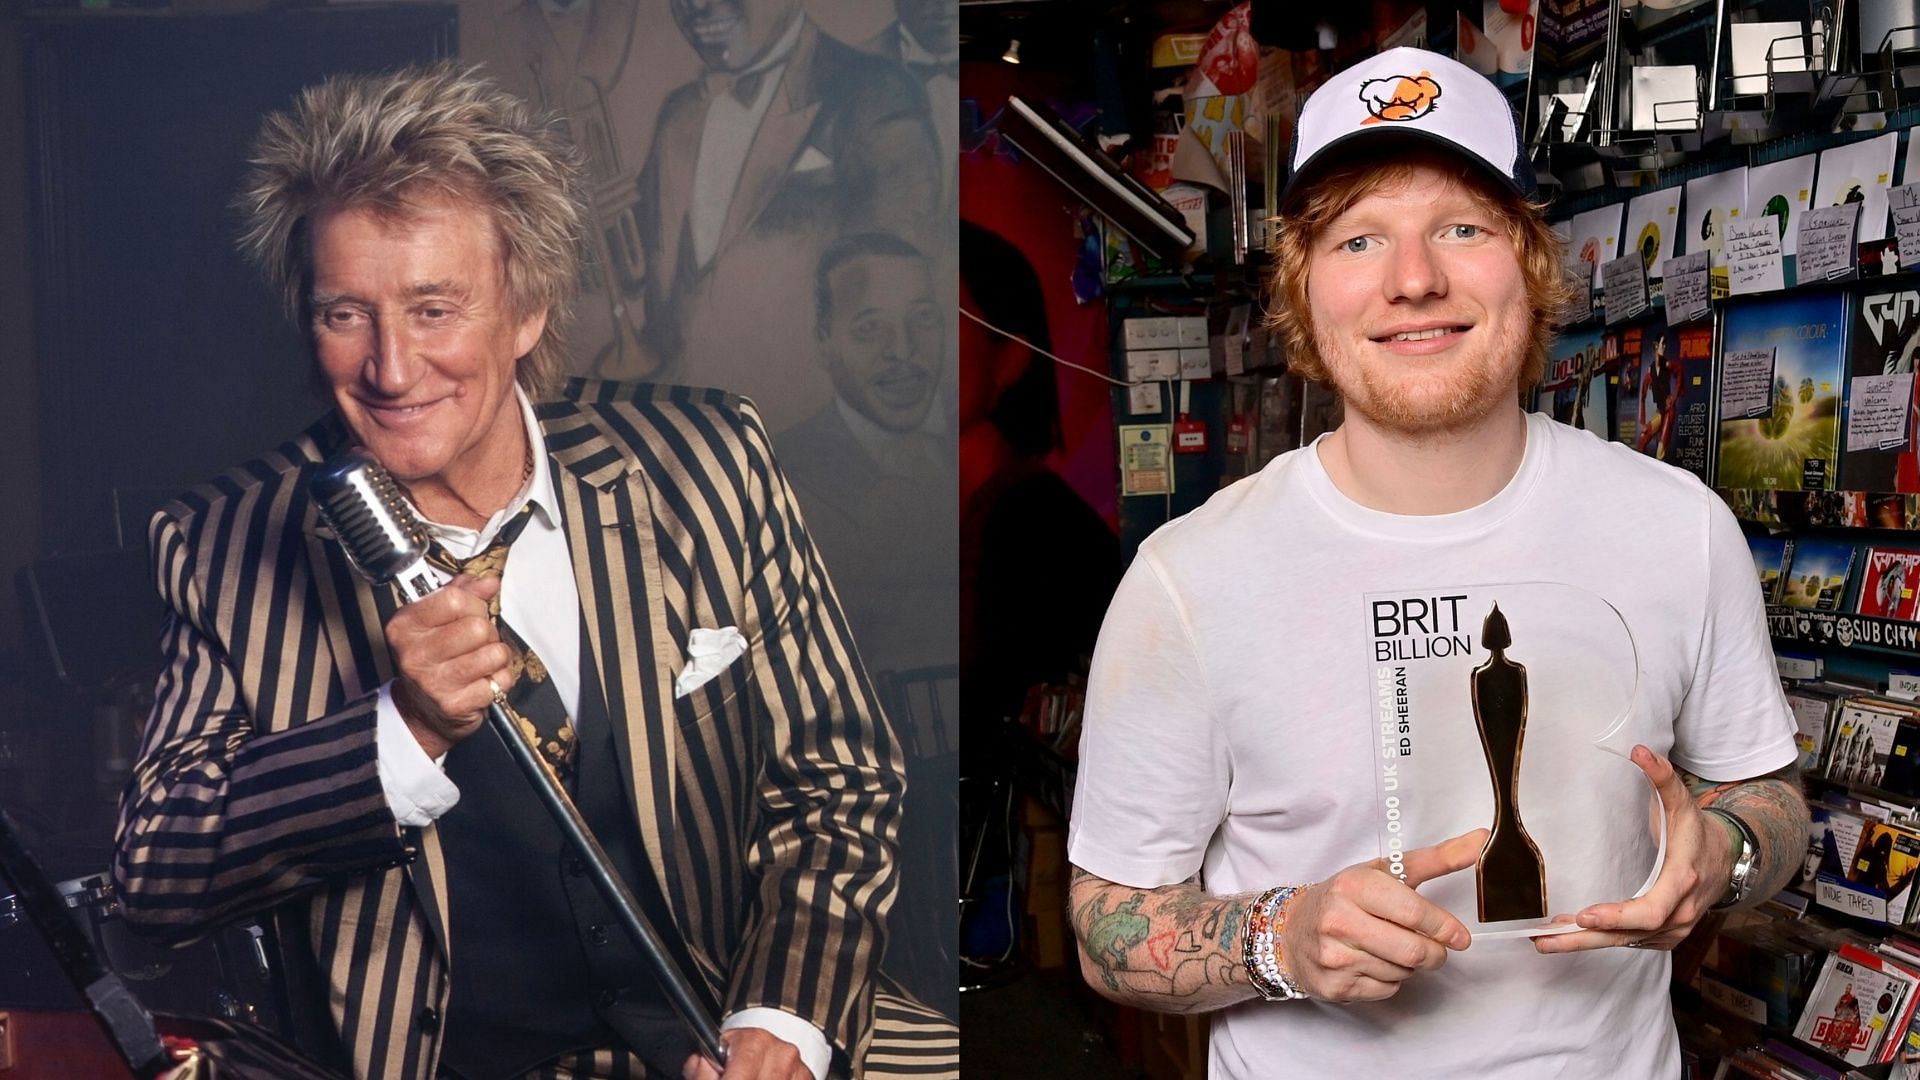 Rod Stewart recently landed harsh criticism on Ed Sheeran&rsquo;s music (Image via Facebook / Rod Stewart / Ed Sheeran)